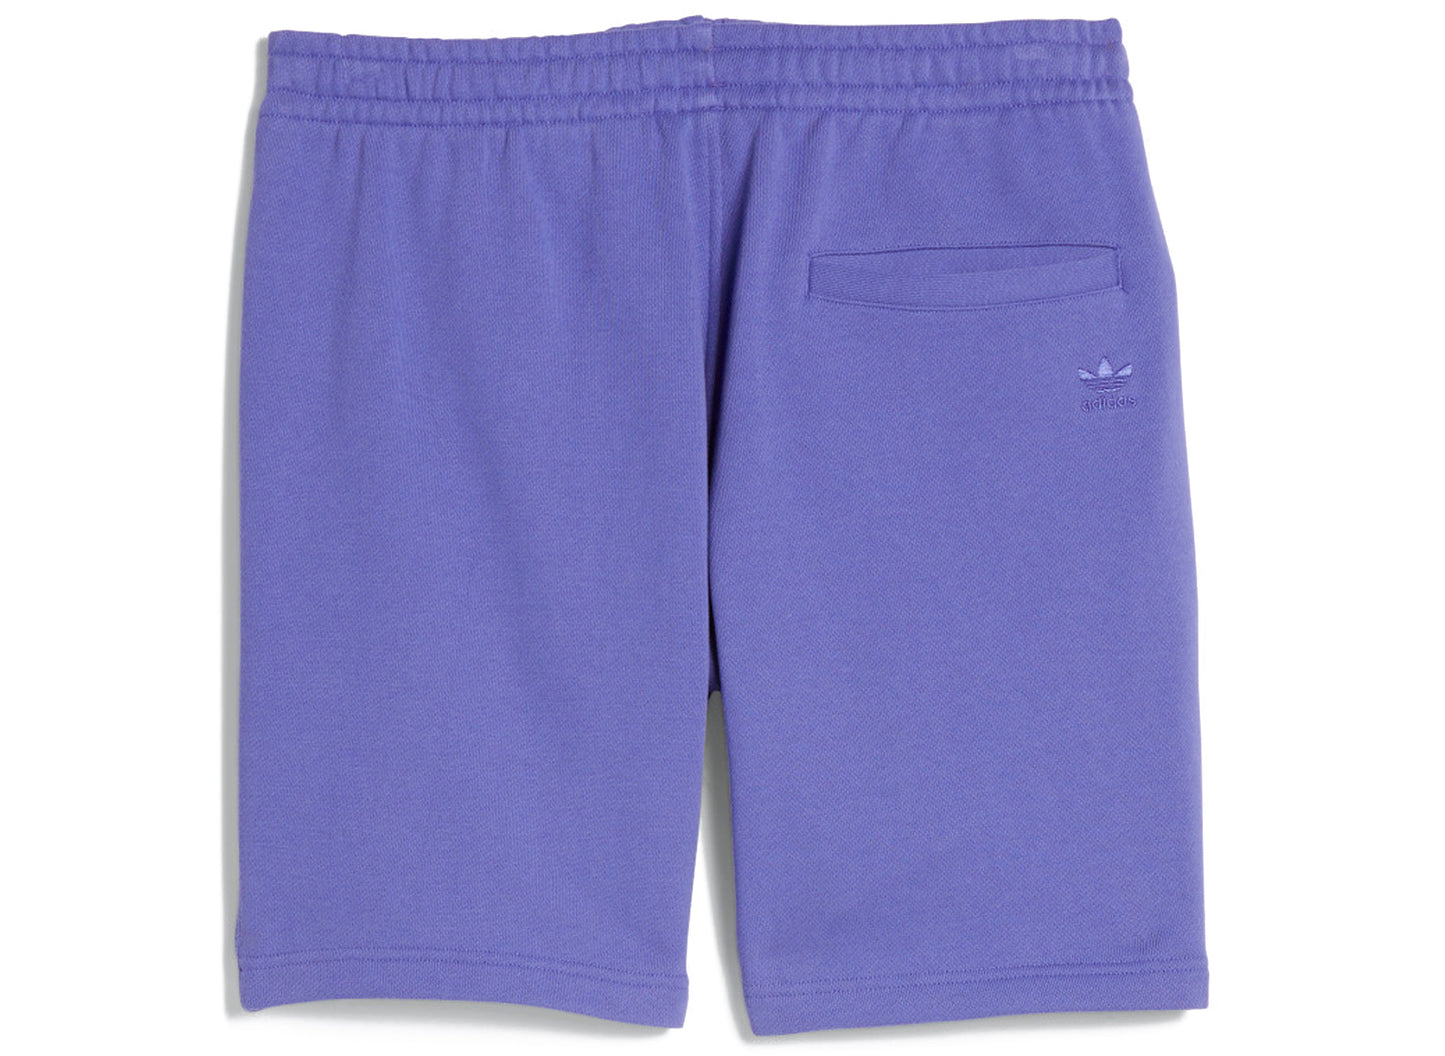 Adidas Pharrell Williams Basics Shorts in Purple